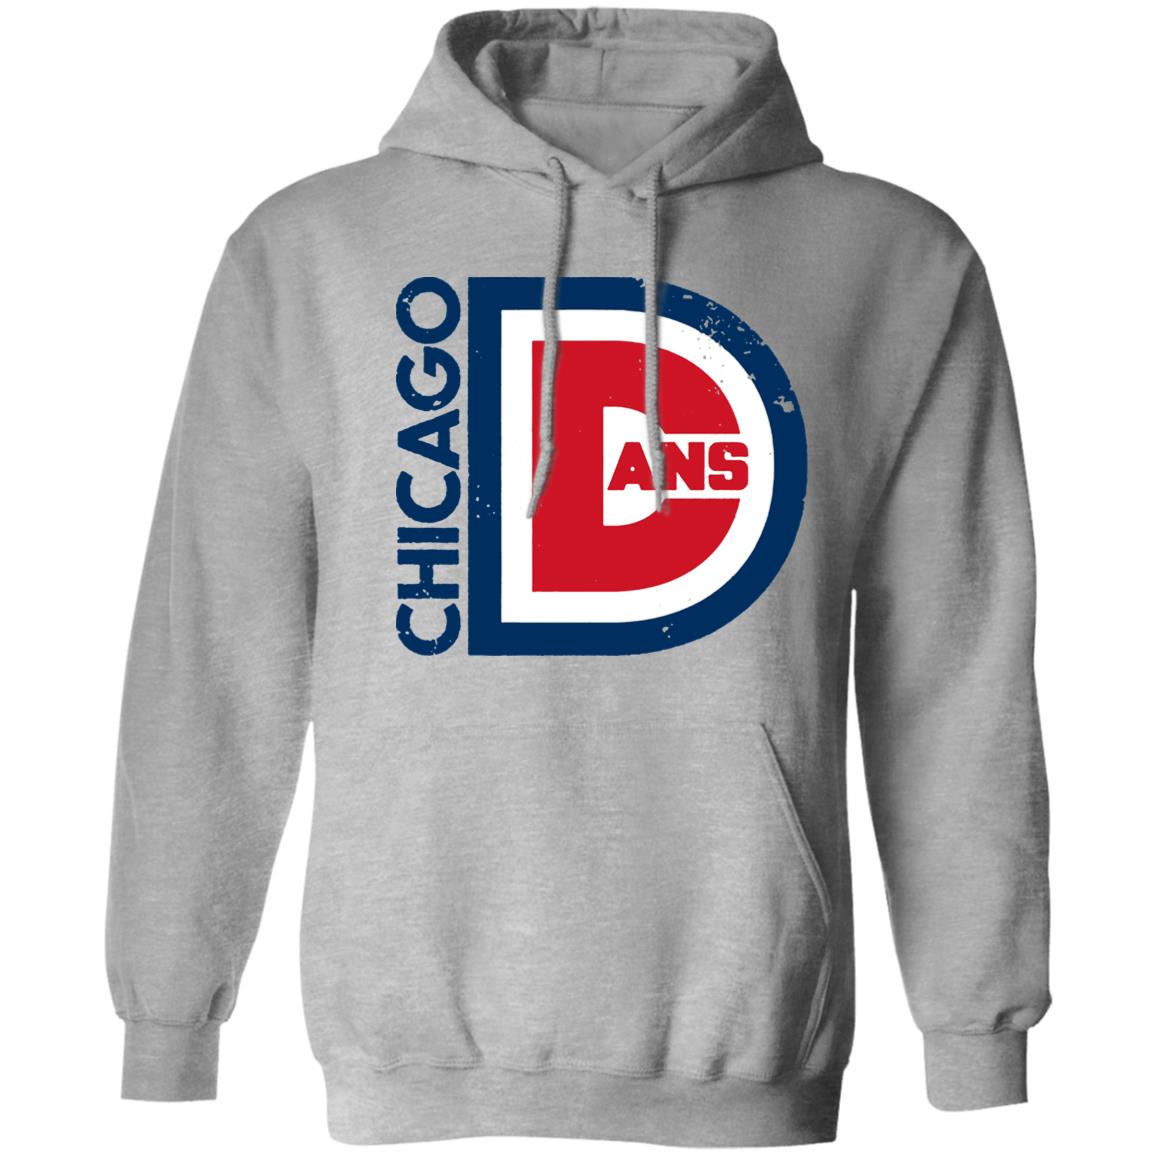 CHICAGO DANS SHIRT Dansby Swanson, Chicago Cubs - Ellieshirt